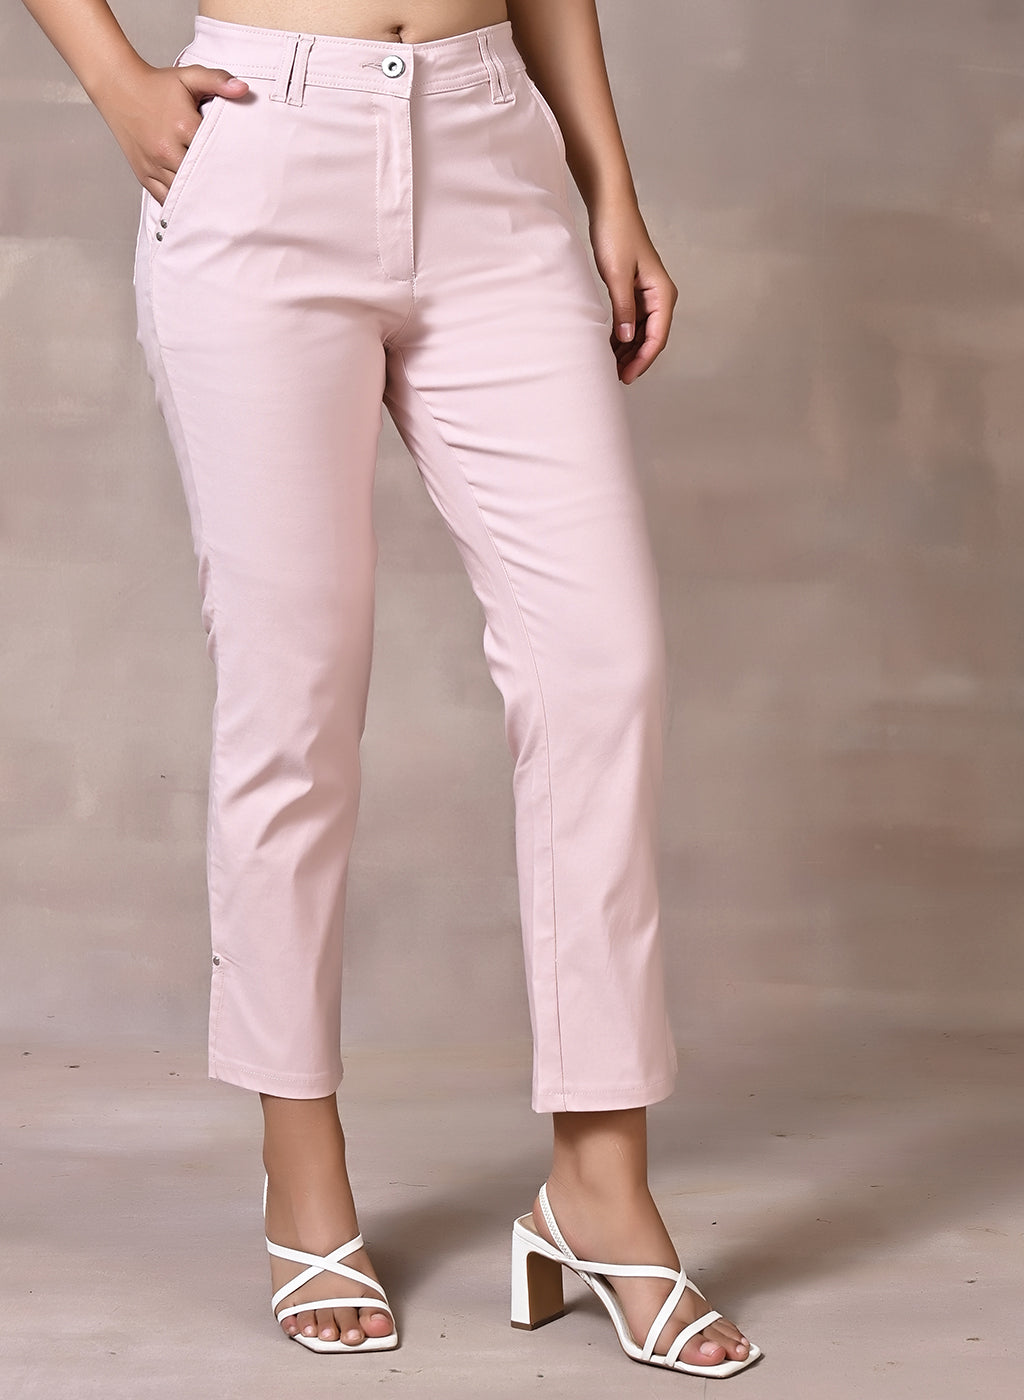 Shop Elegant Capri Pants for Women Online in India